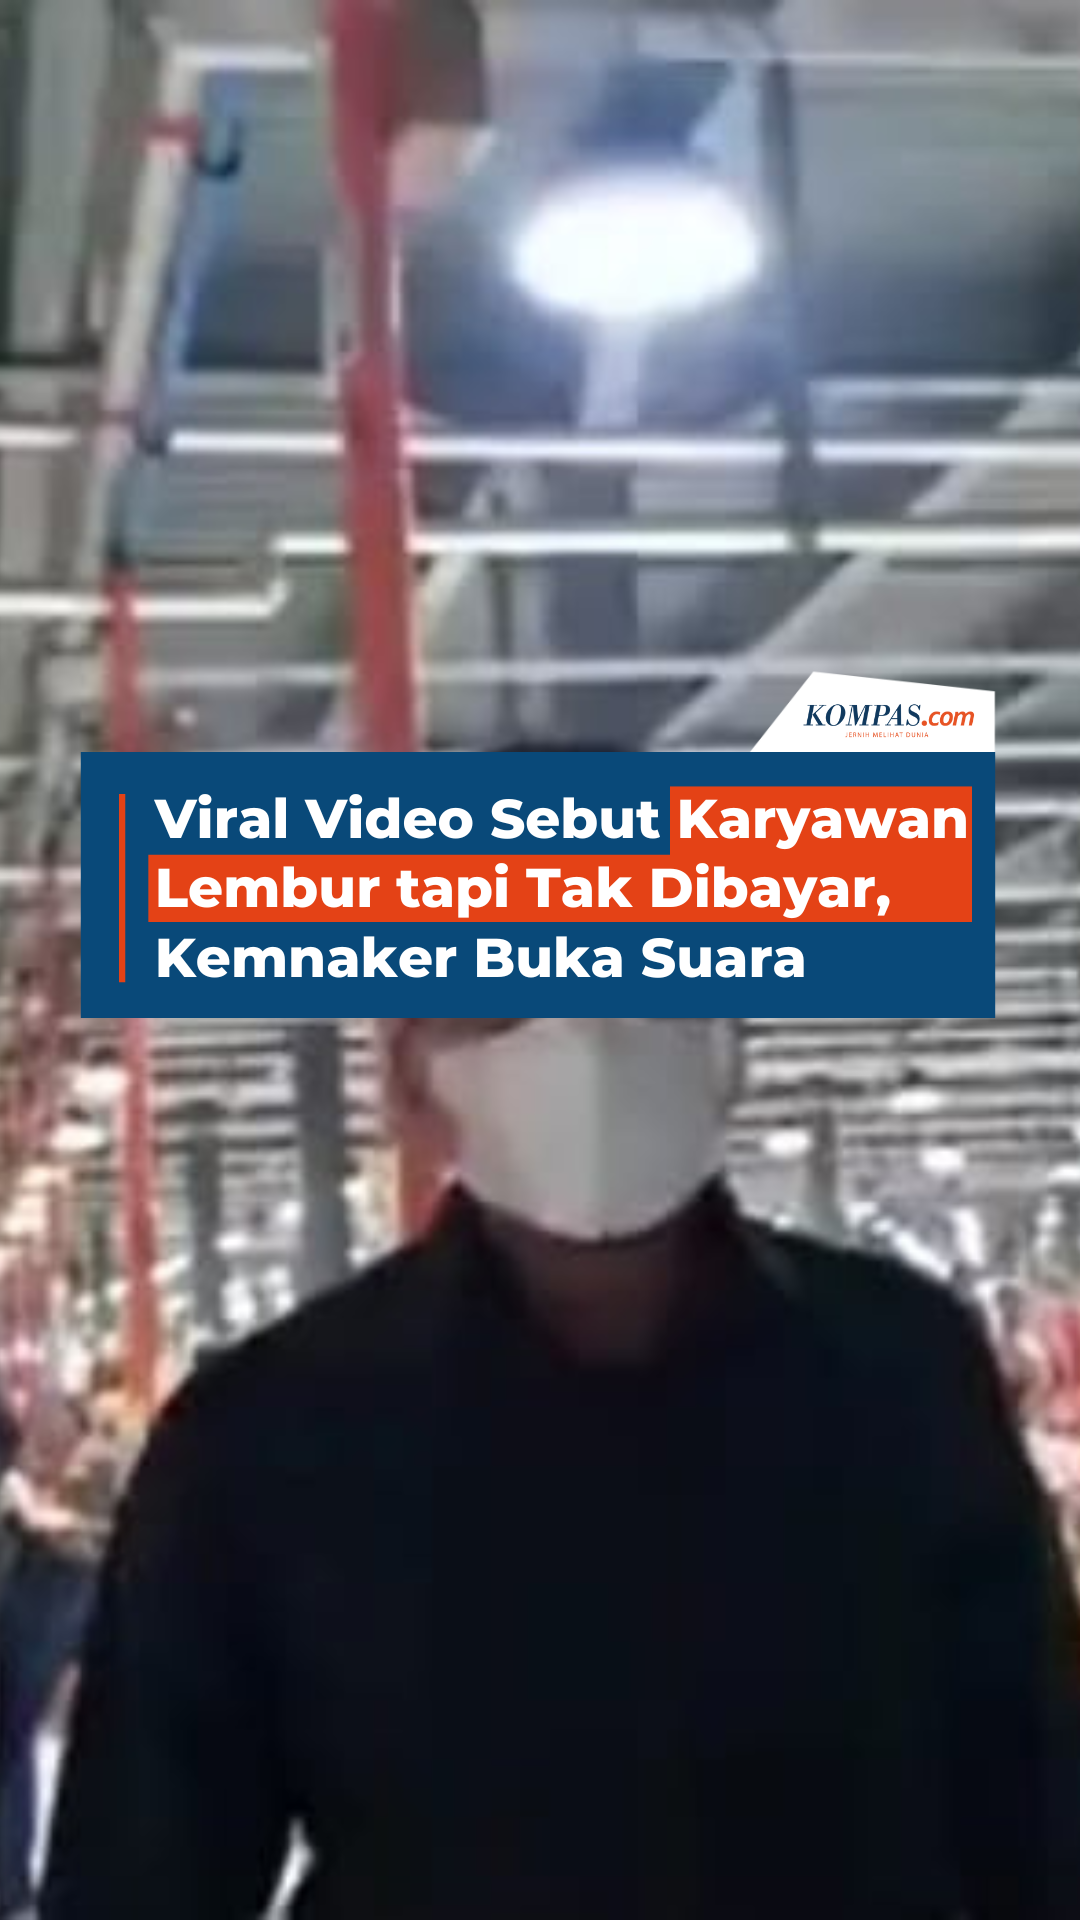 Viral Video Sebut Karyawan Lembur tapi Tak Dibayar, Kemnaker Buka Suara